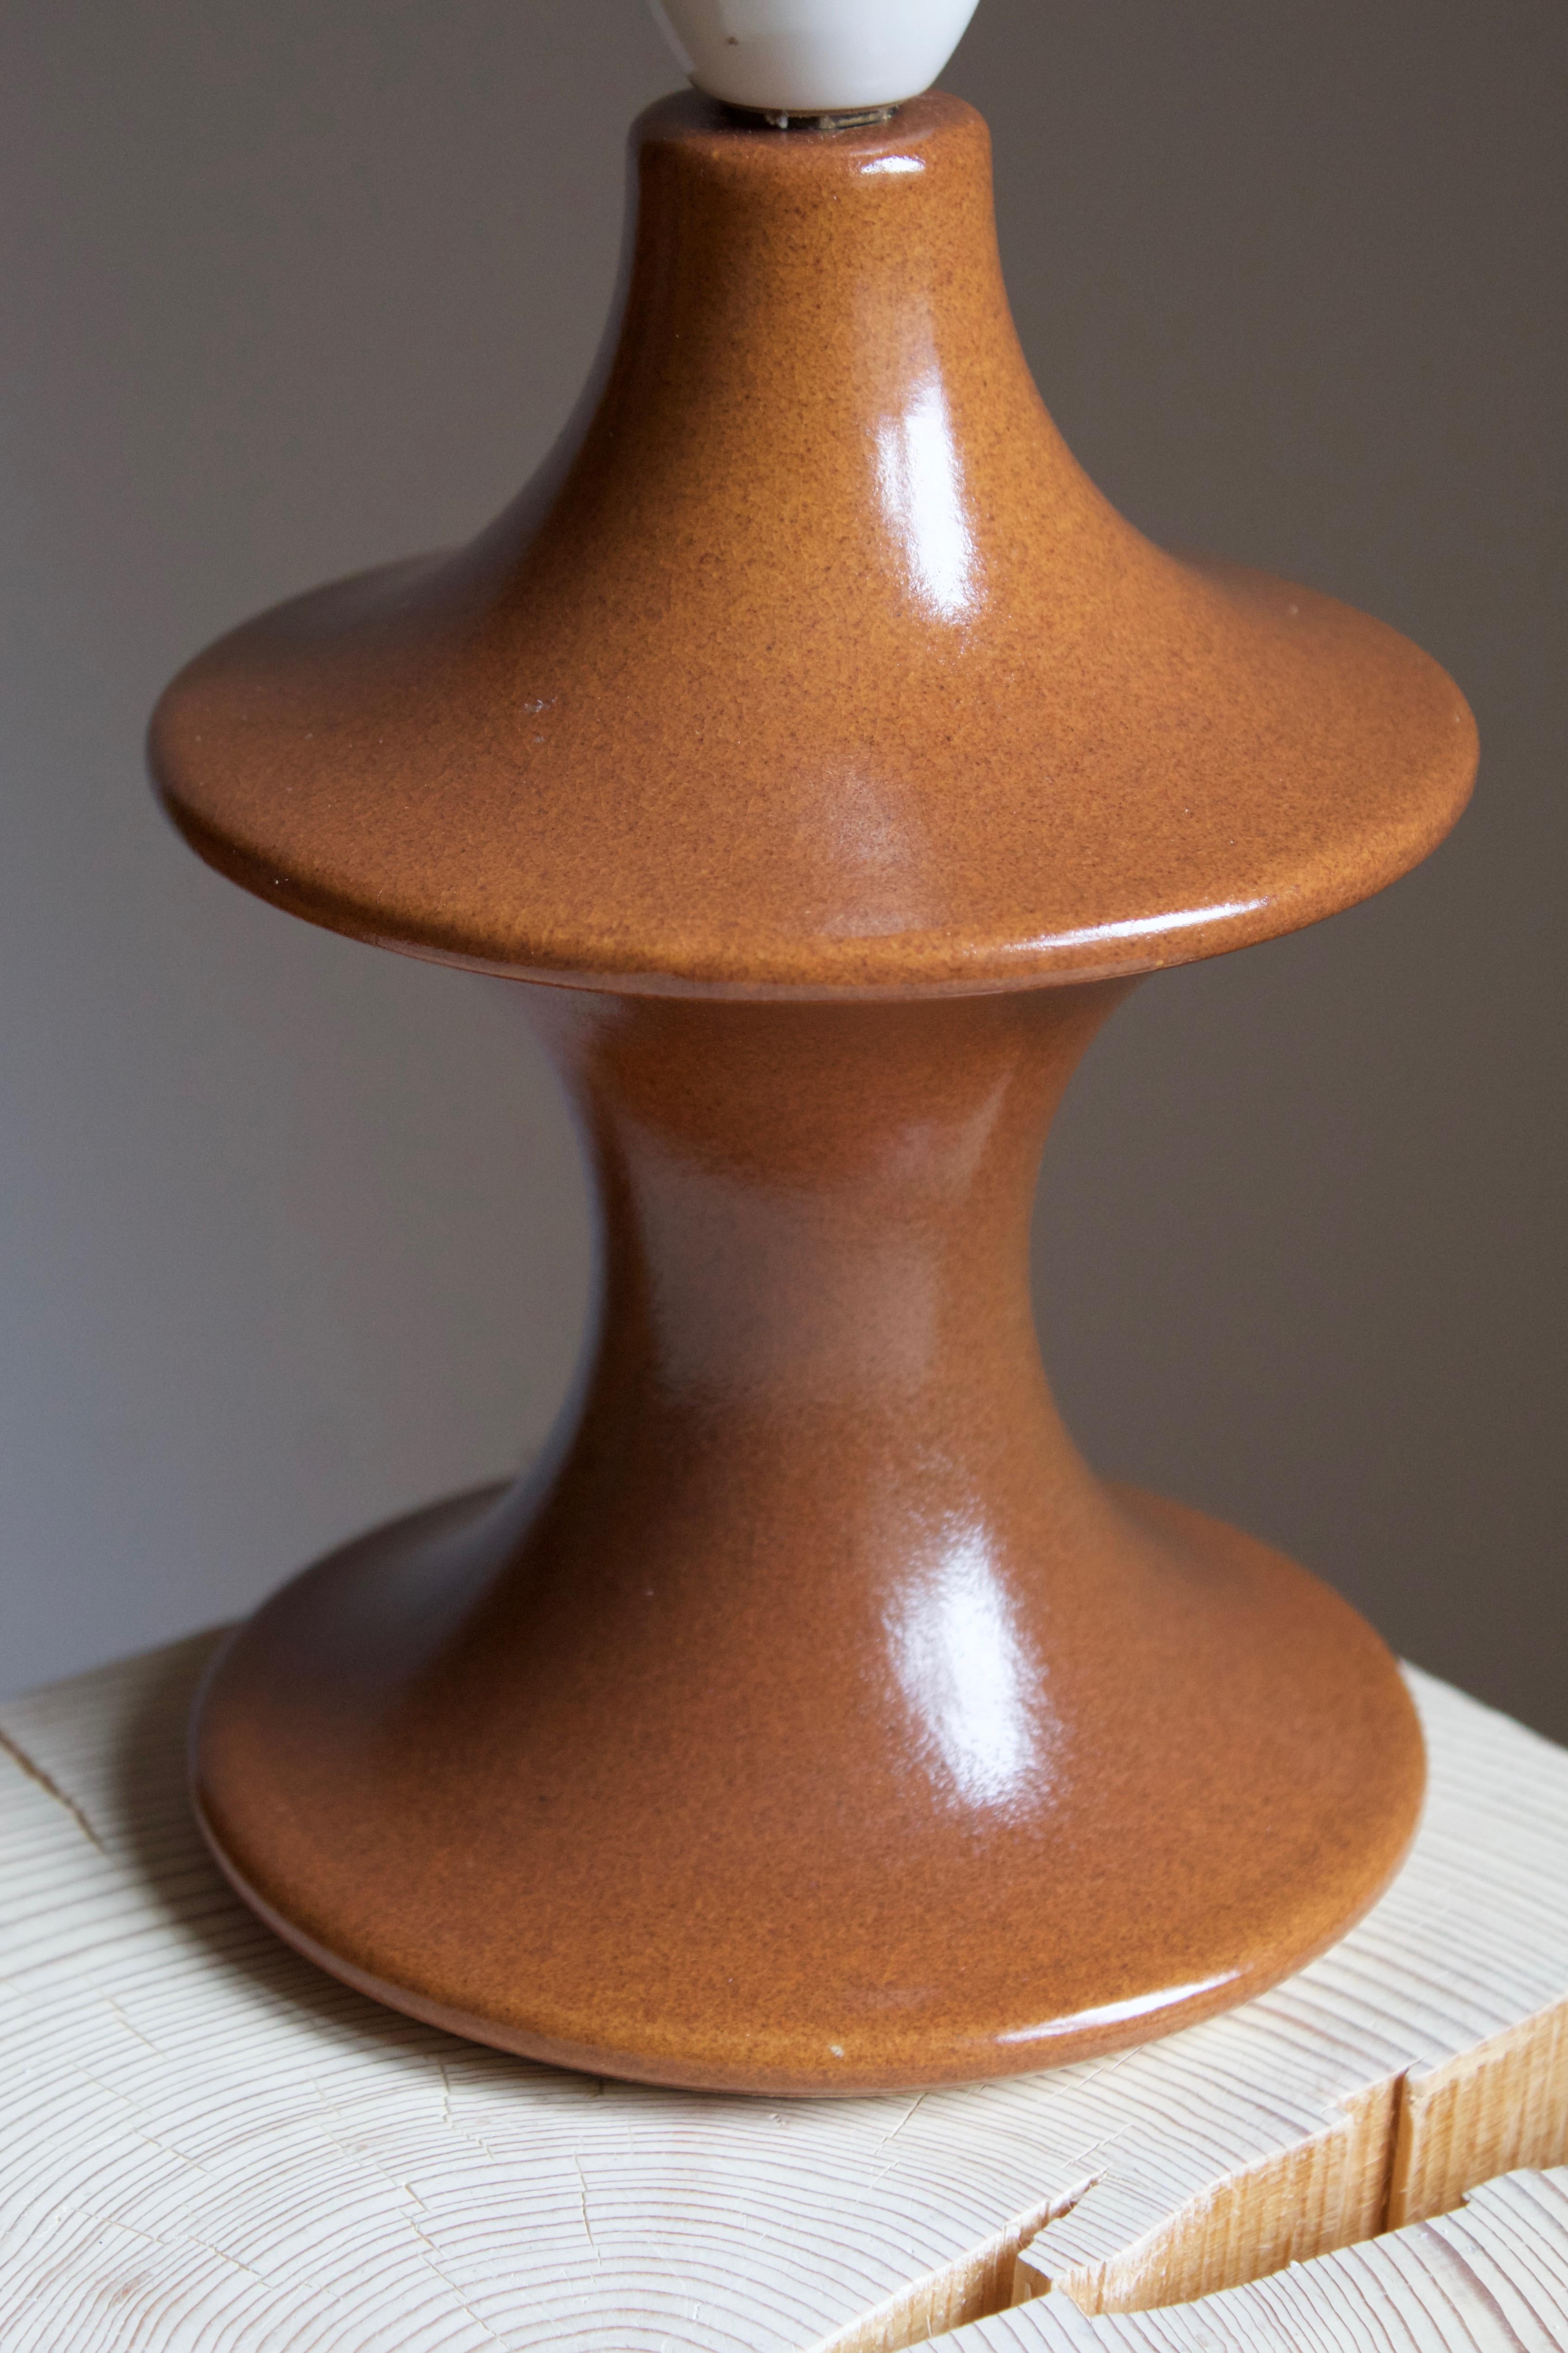 Danish Hasle Keramik, Table Lamp, Brown Glazed Stoneware, Bornholm, Denmark, 1960s For Sale